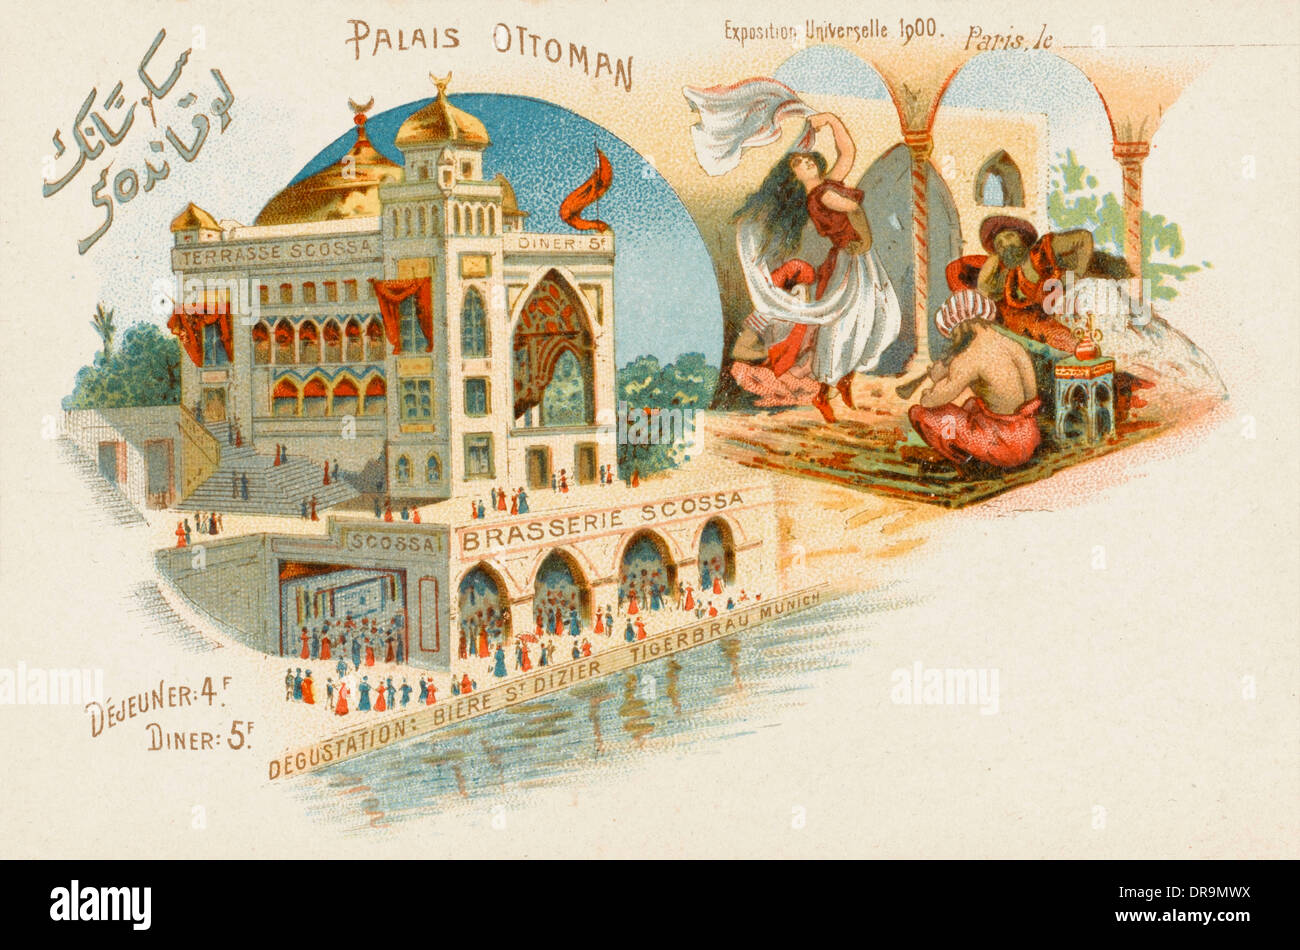 Ottoman Palace - Paris Exhibition 1900 Stock Photo